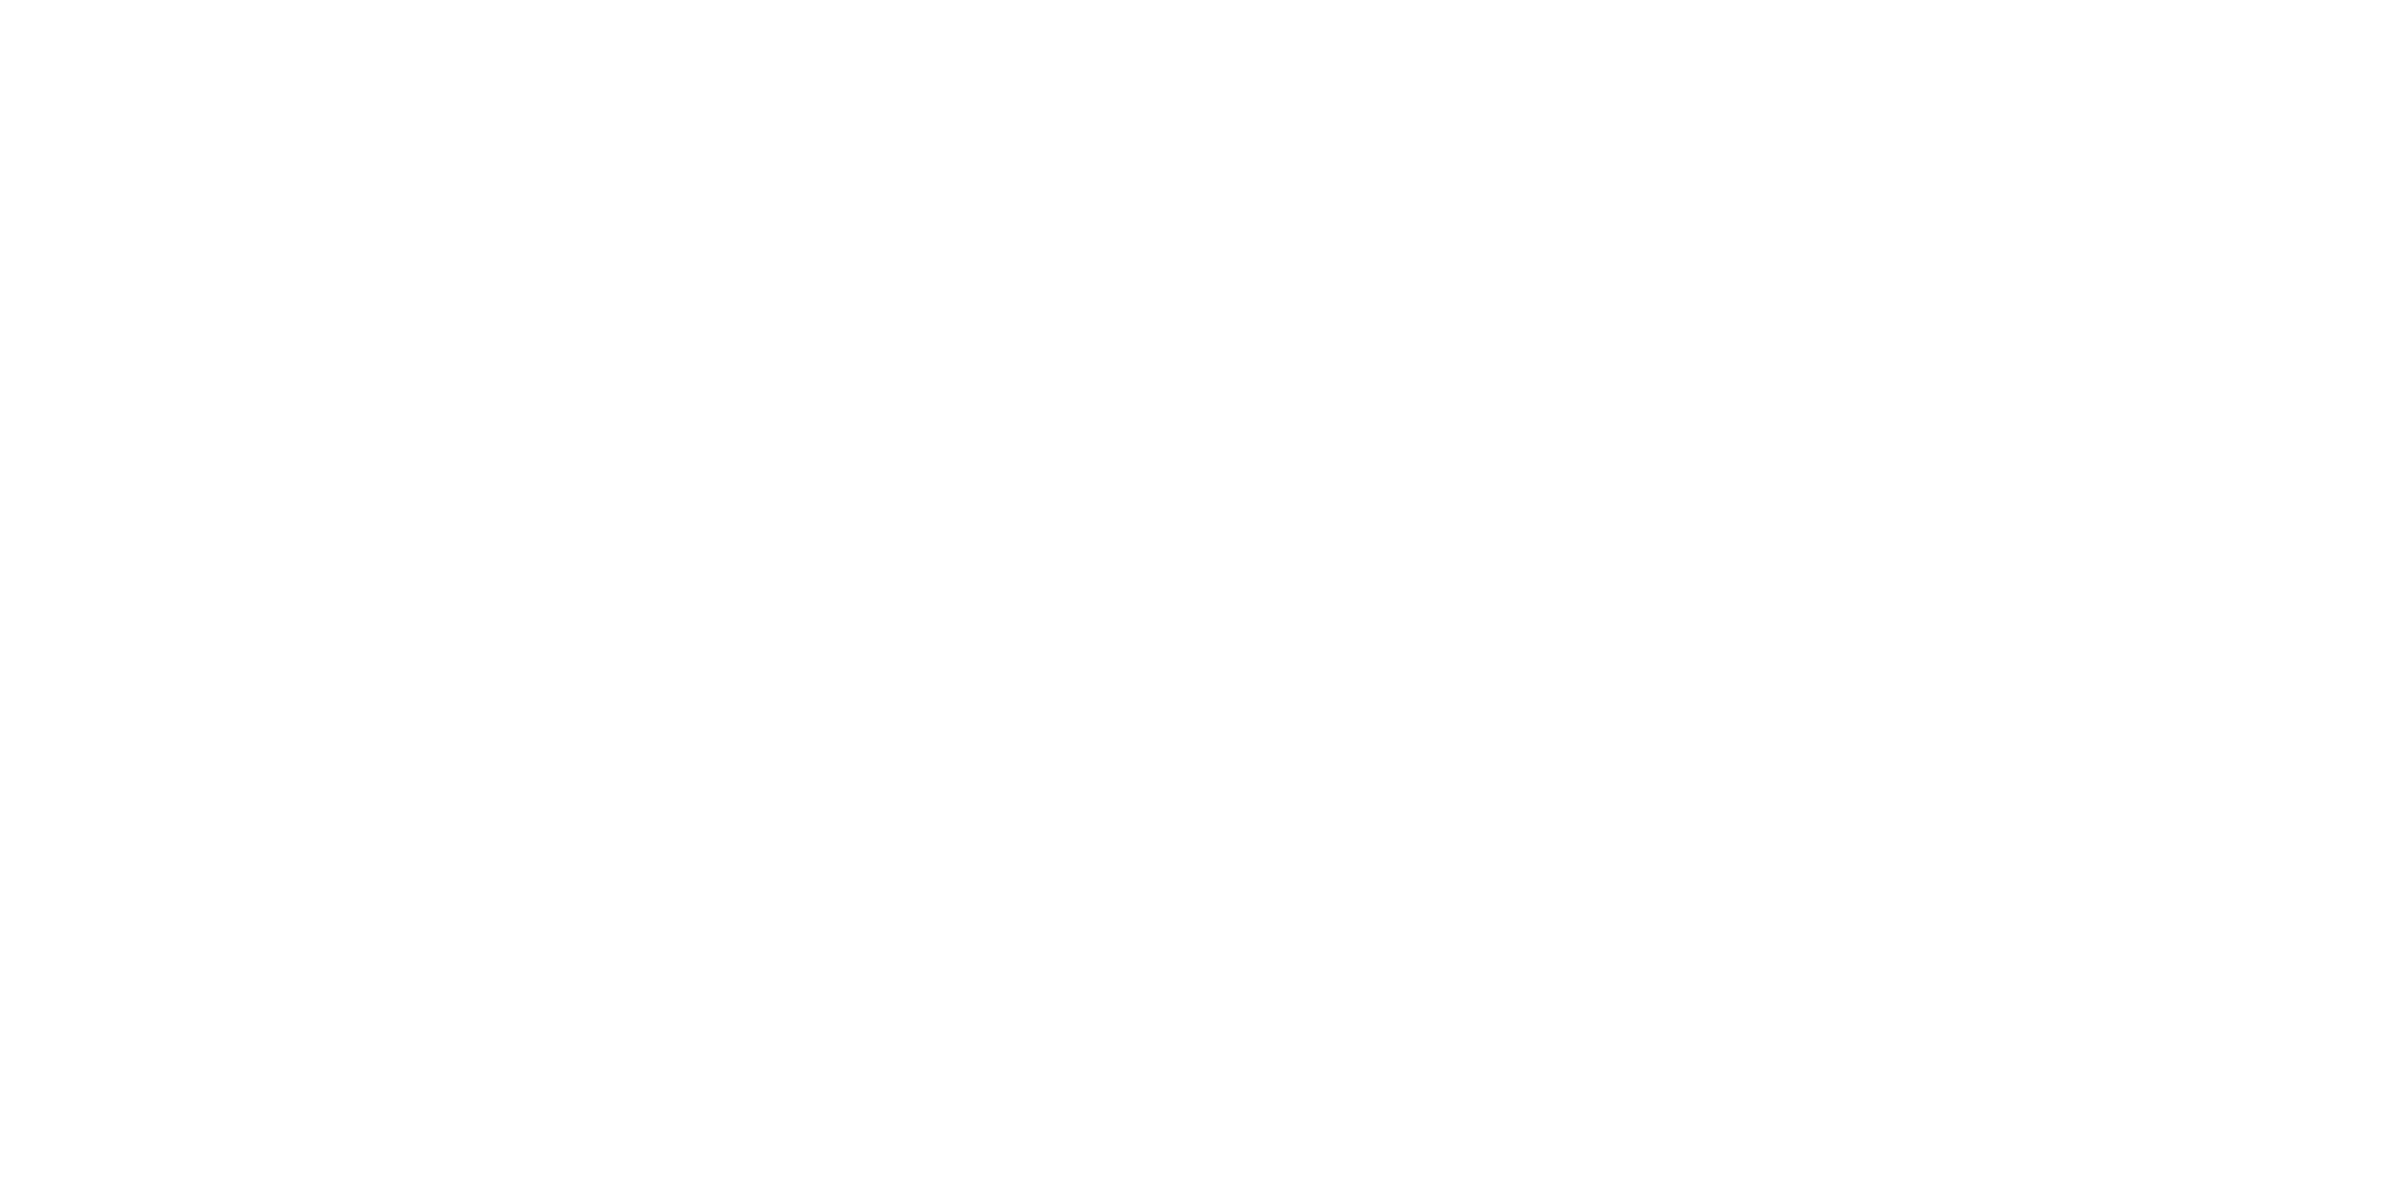 trueprodigy Logo